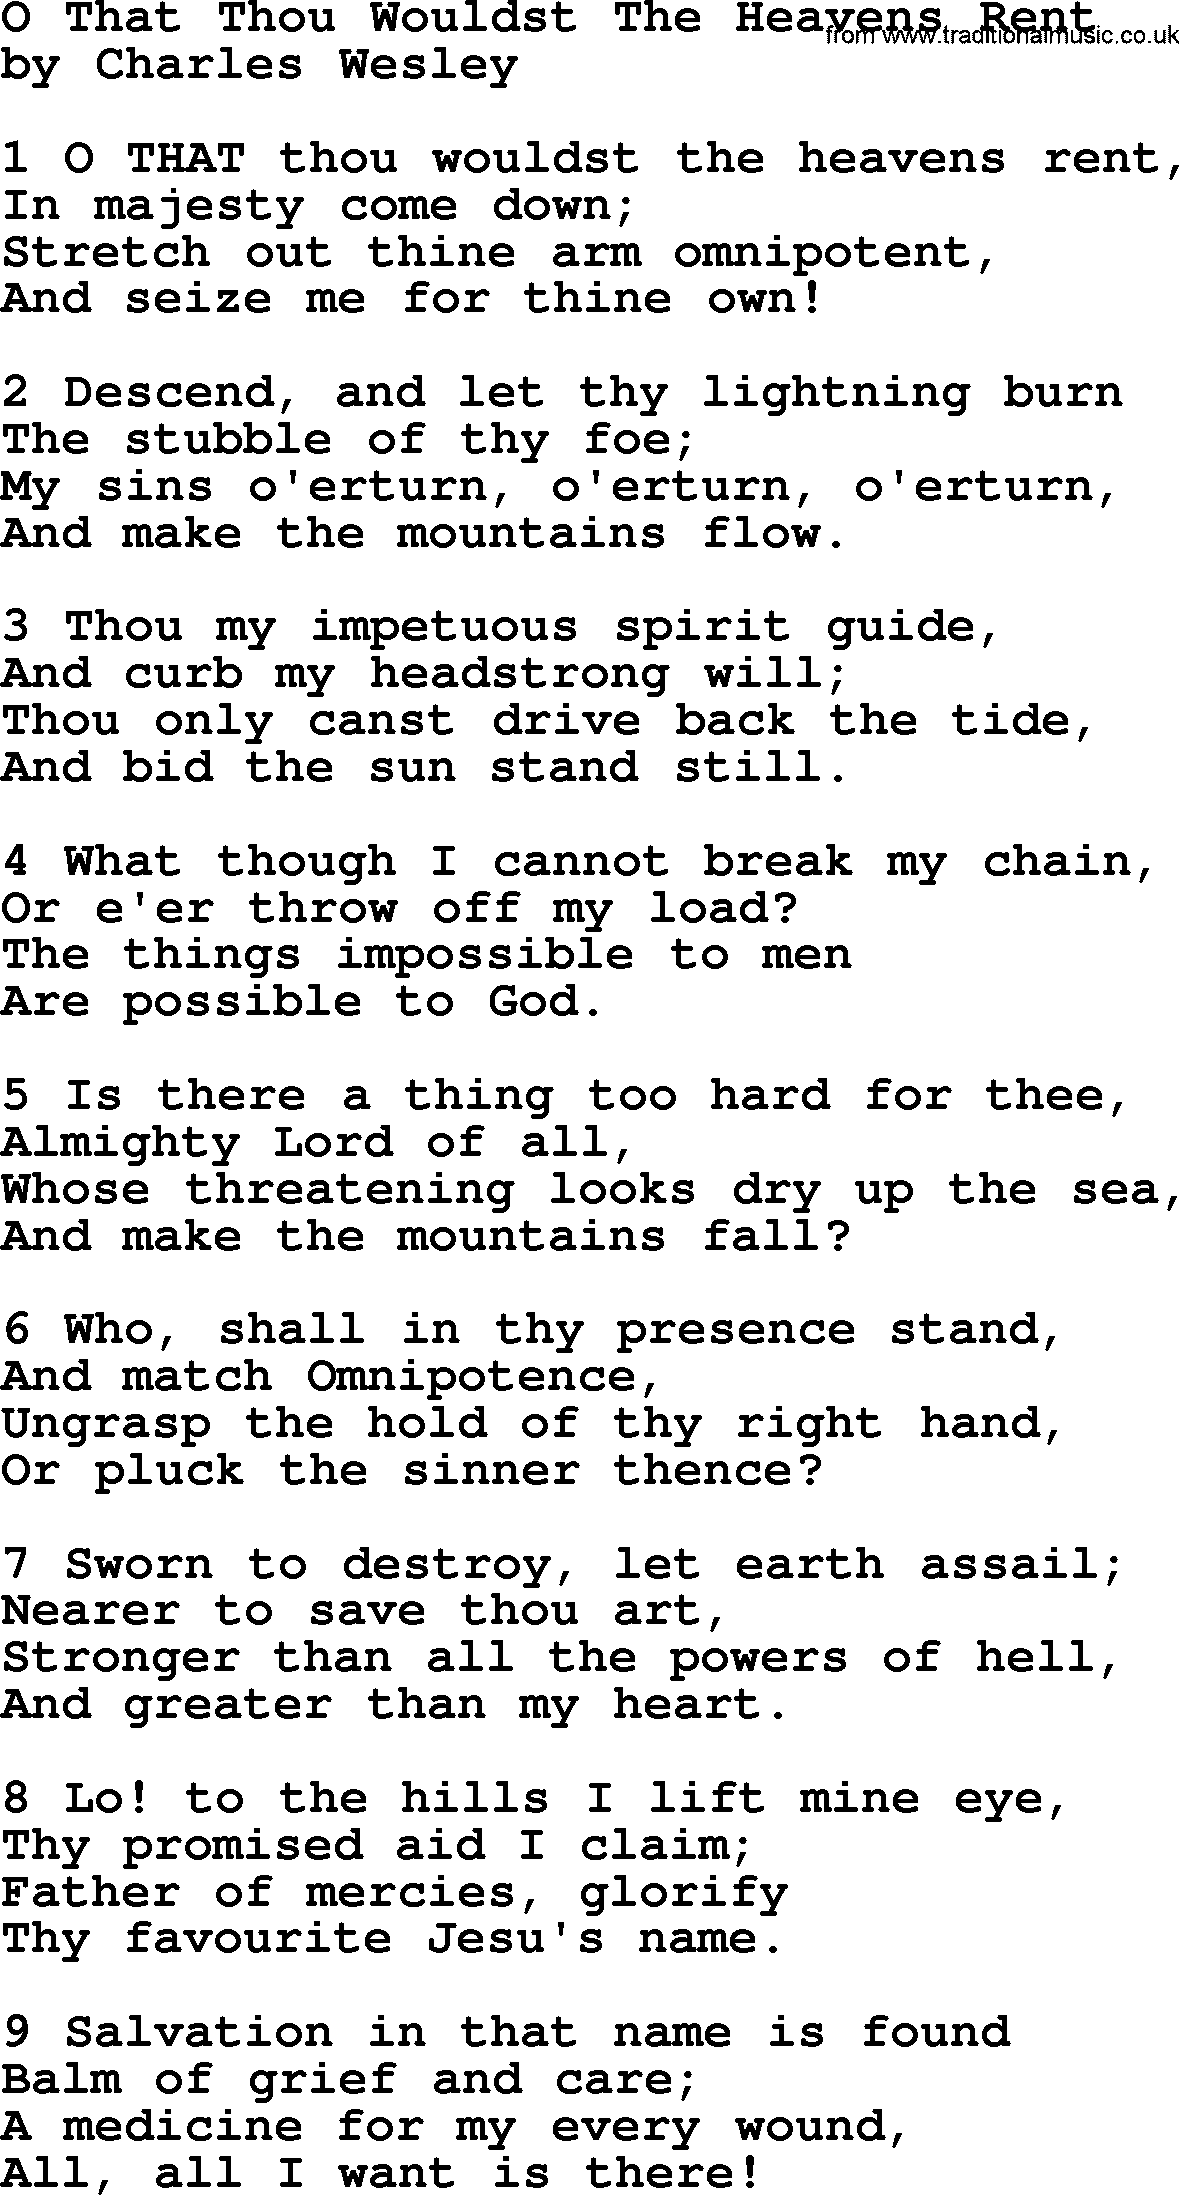 Charles Wesley hymn: O That Thou Wouldst The Heavens Rent, lyrics